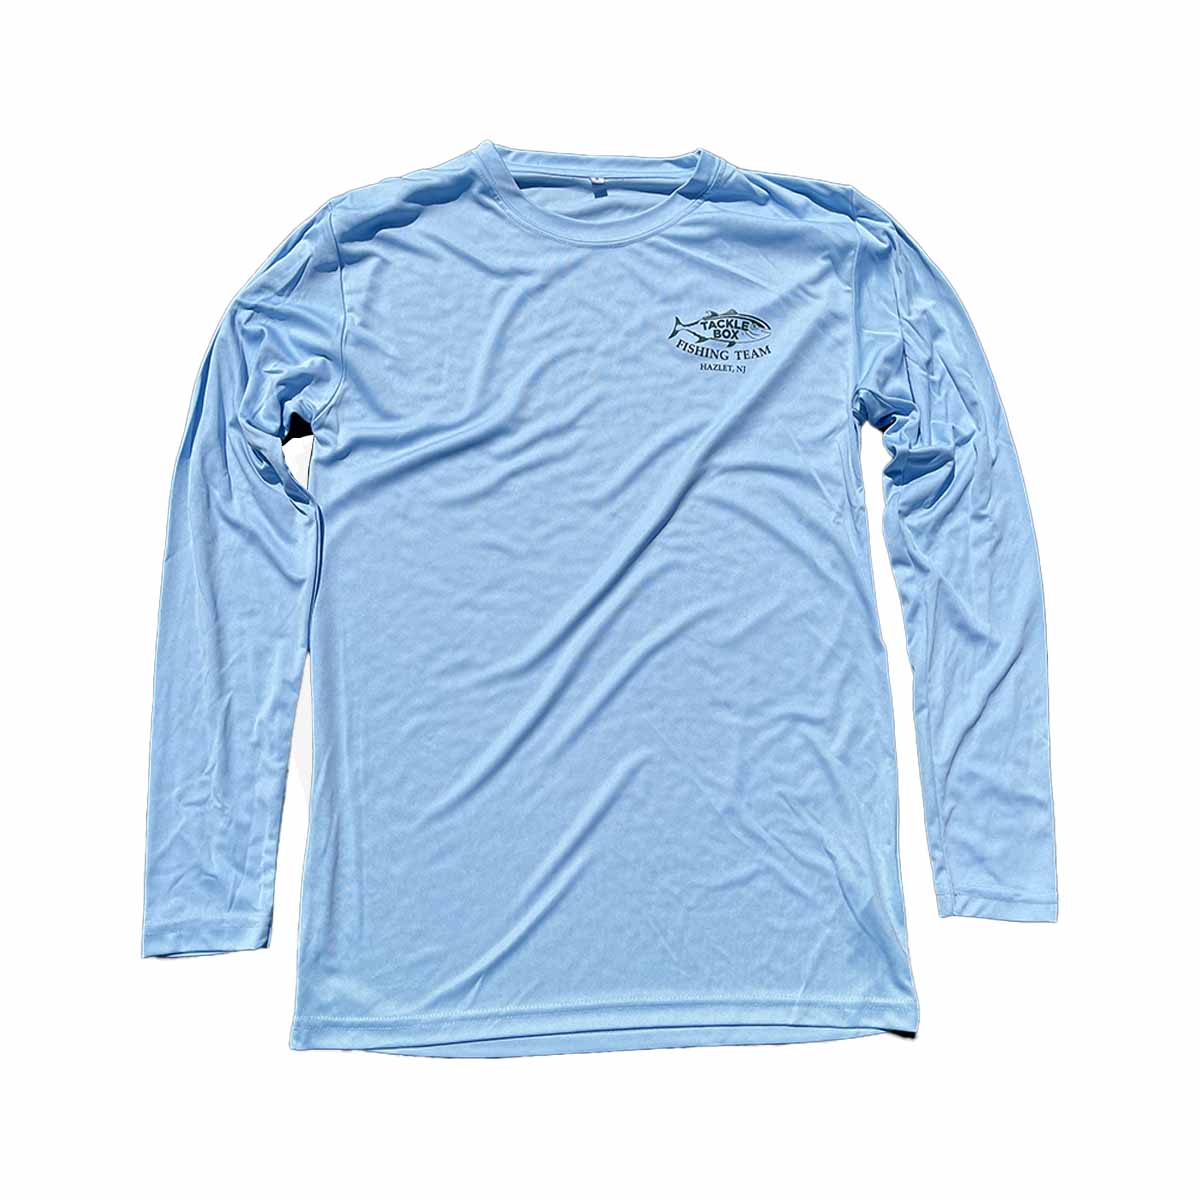 Tackle Box SPF Long Sleeve Retro Logo - Pale Blue – Tackle Box NJ